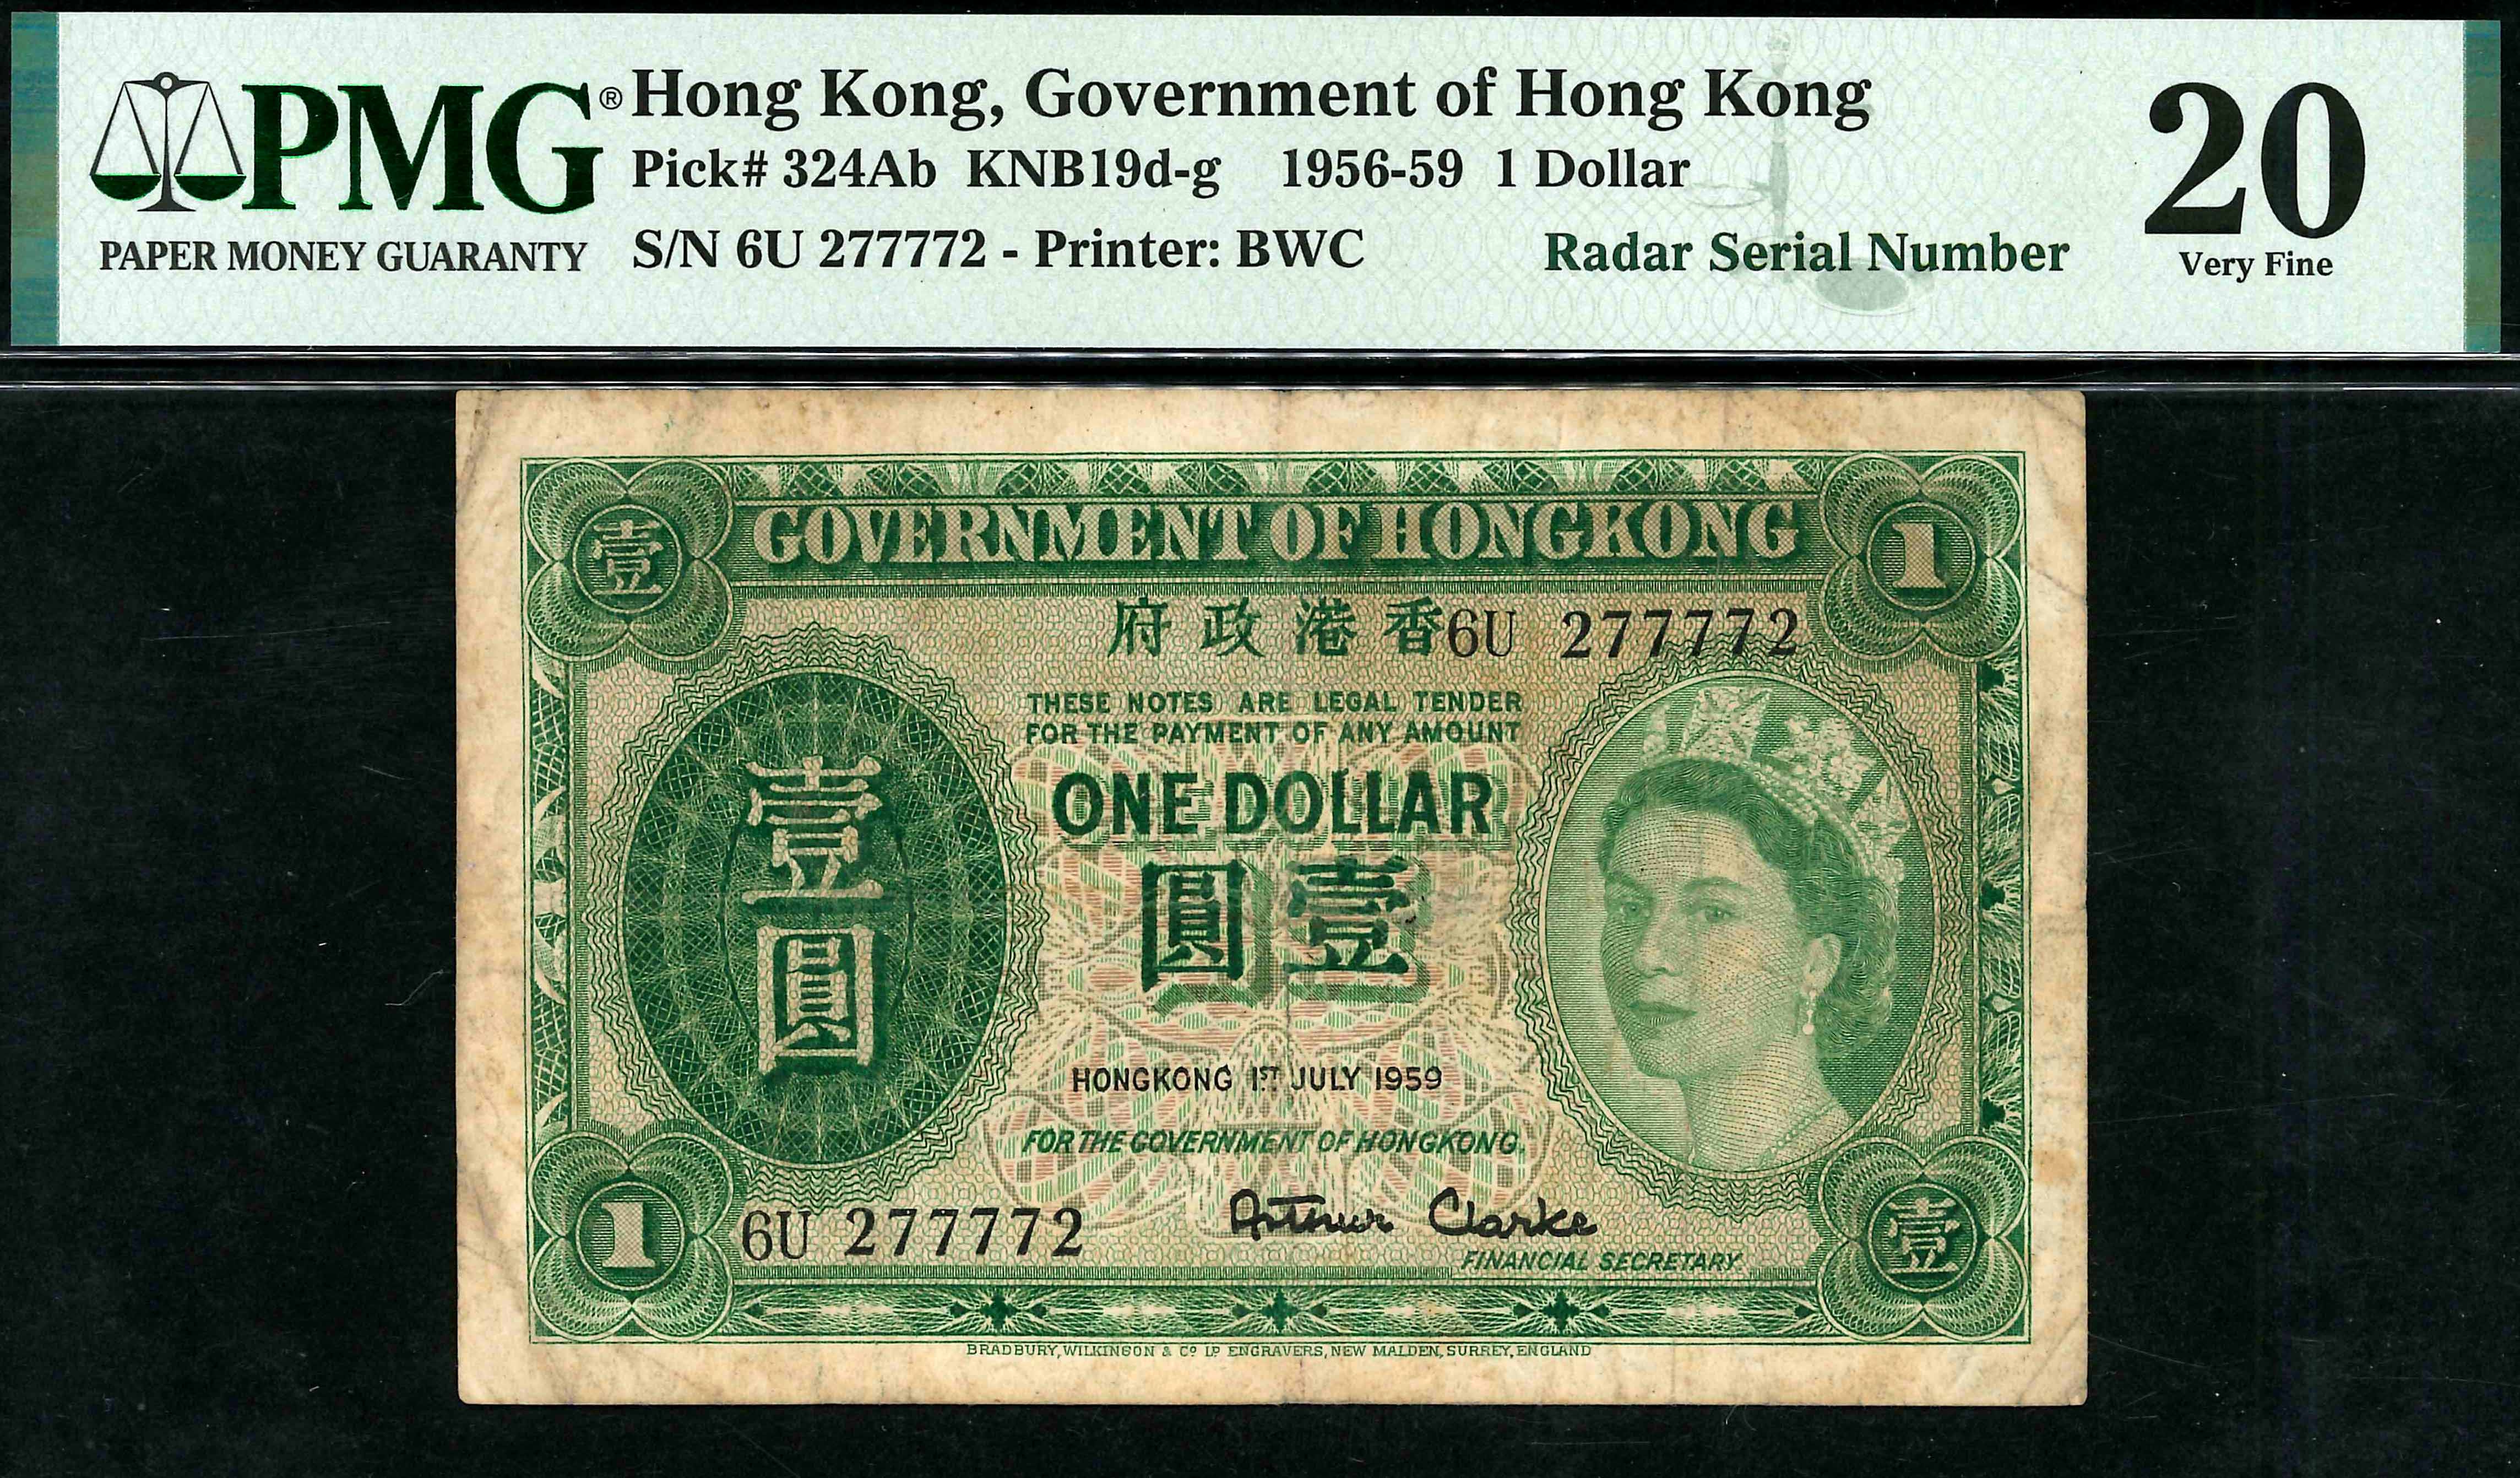 Hong Kong, 1958, 1 Dollar, P-324Ab, S/N. 6U 277772, Radar S/N 